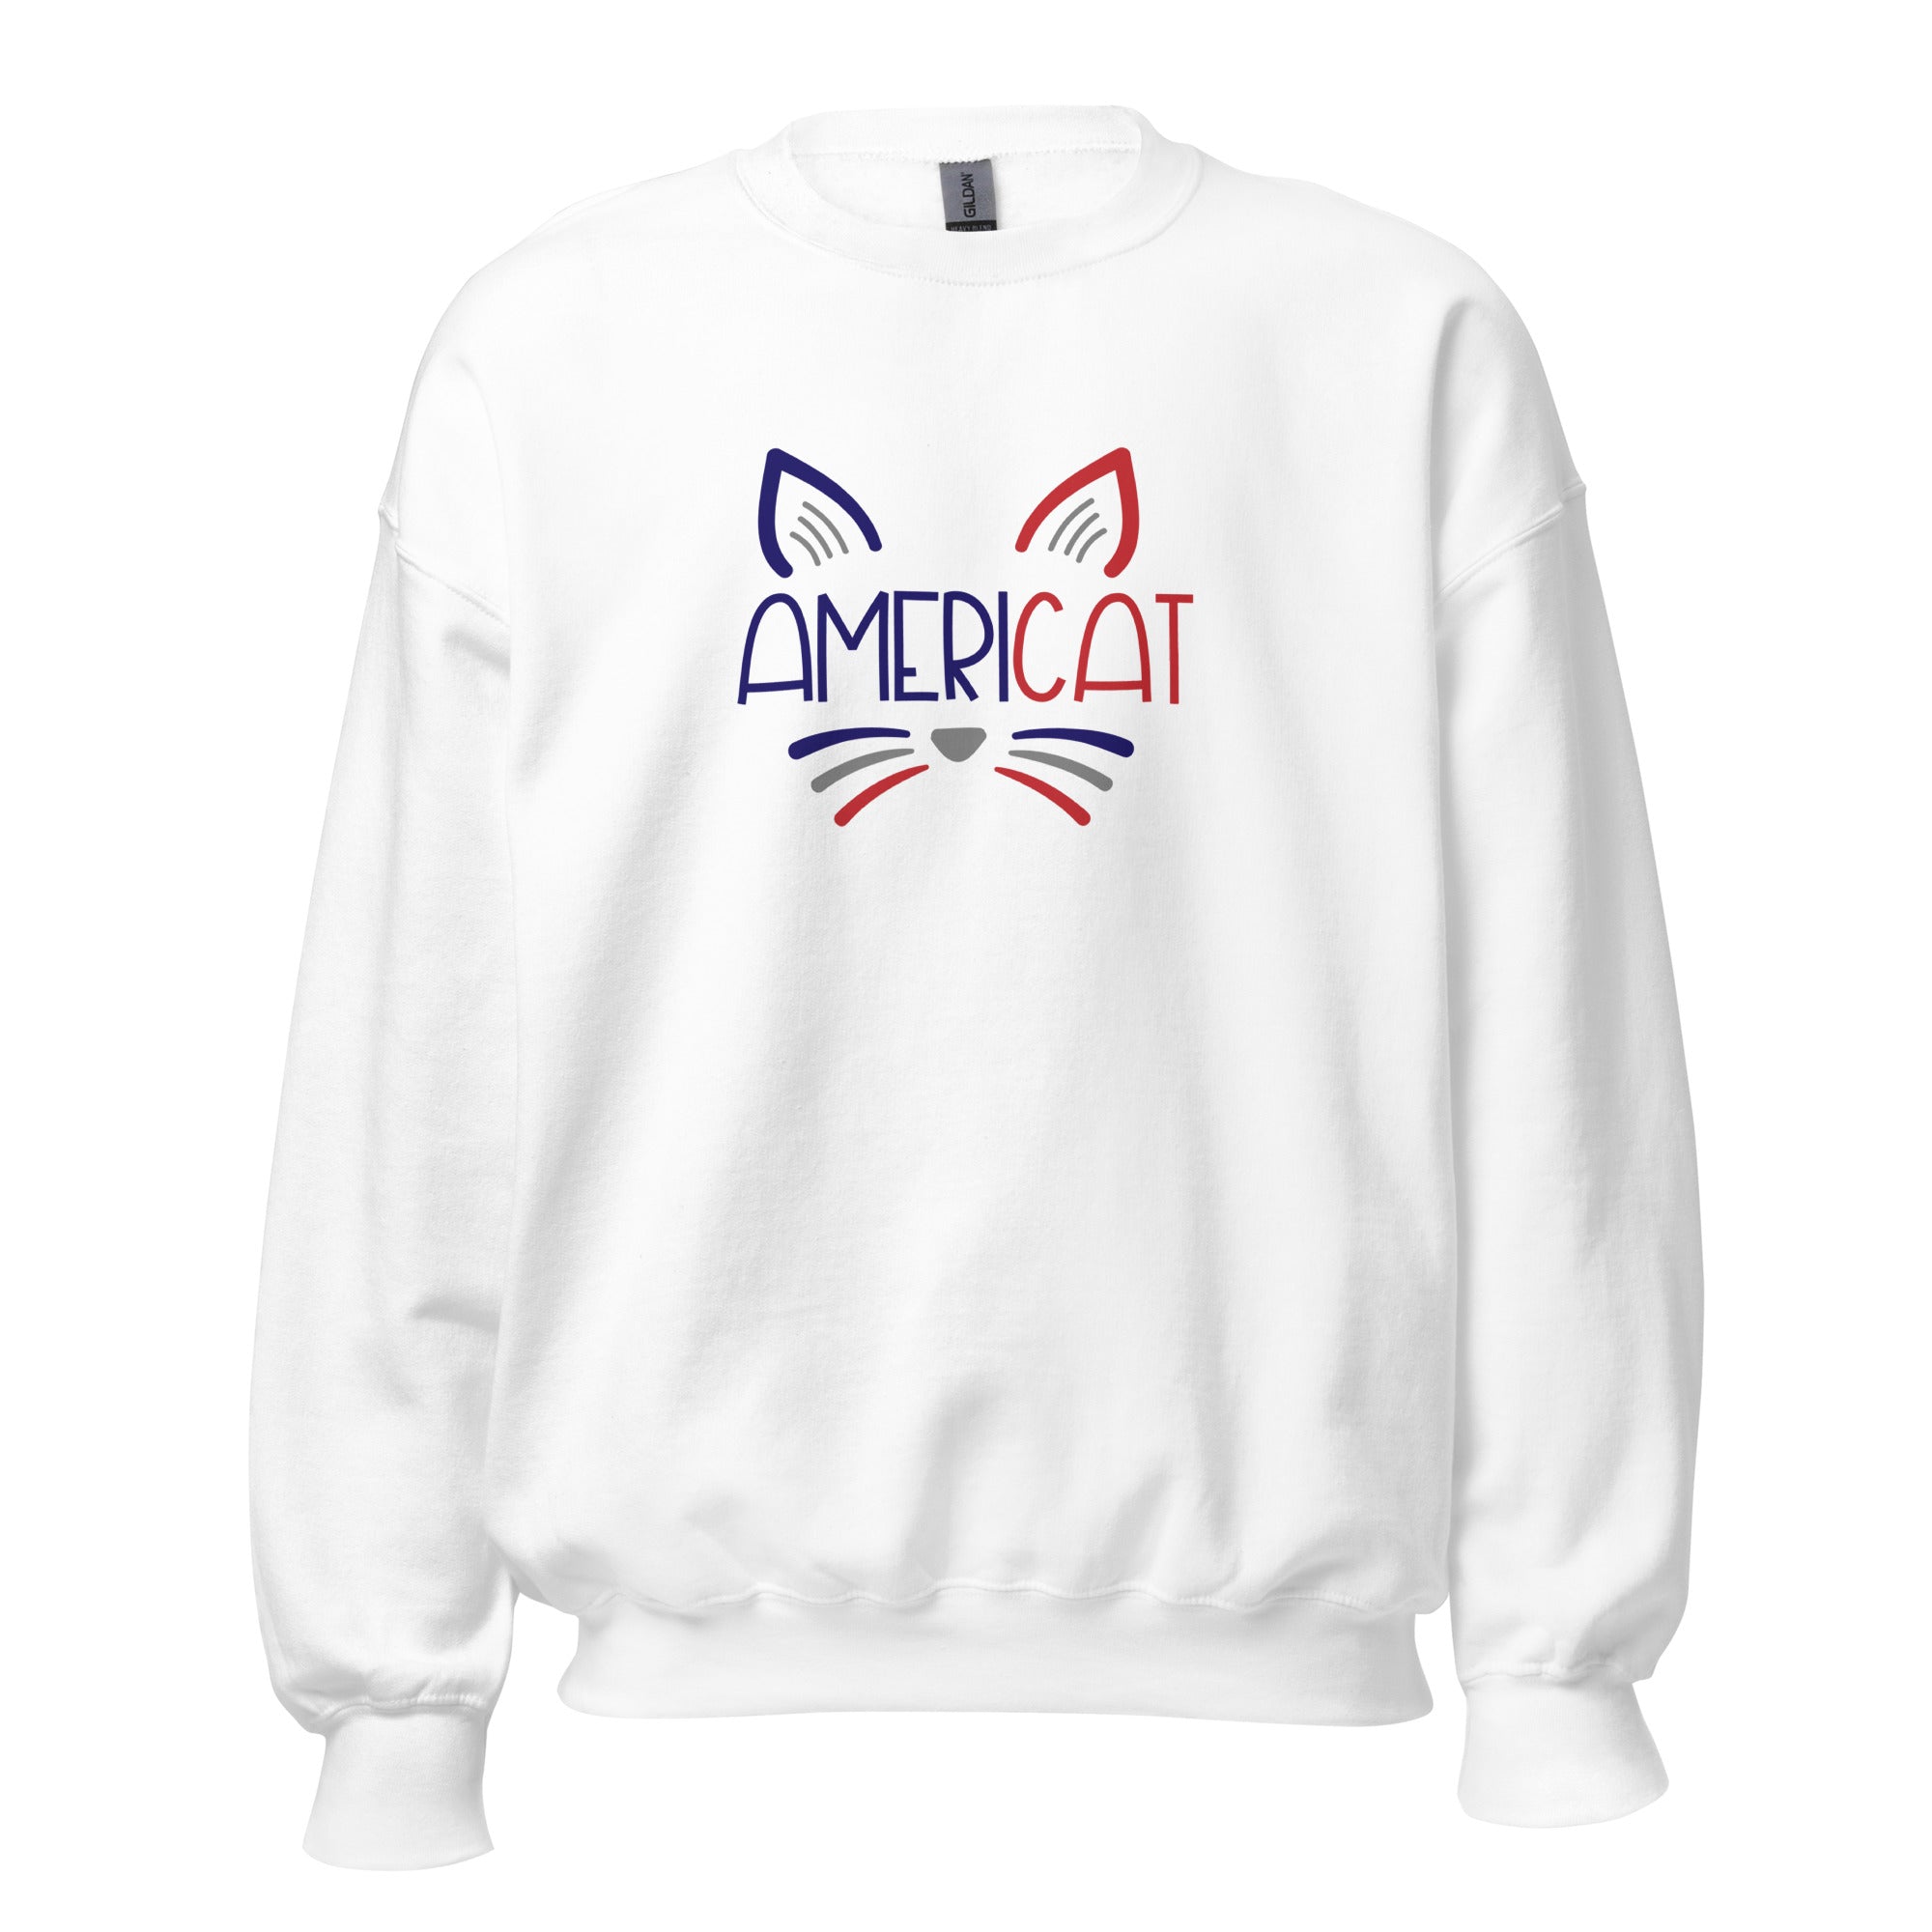 Unisex Crew Neck Sweatshirt - Americat - GRAPHIC T-SHIRTS